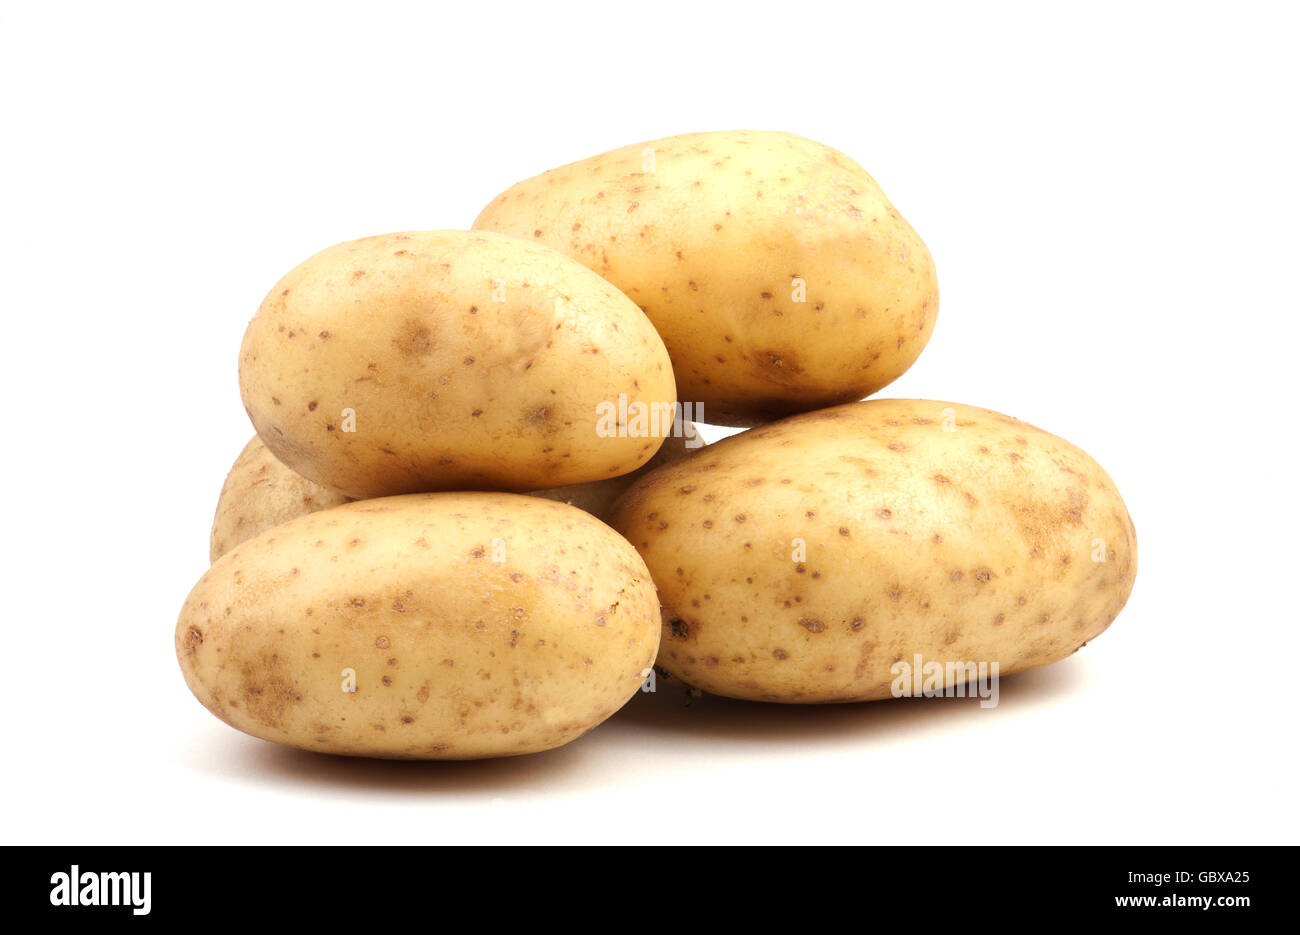 raw potatoes on a white background Stock Photo